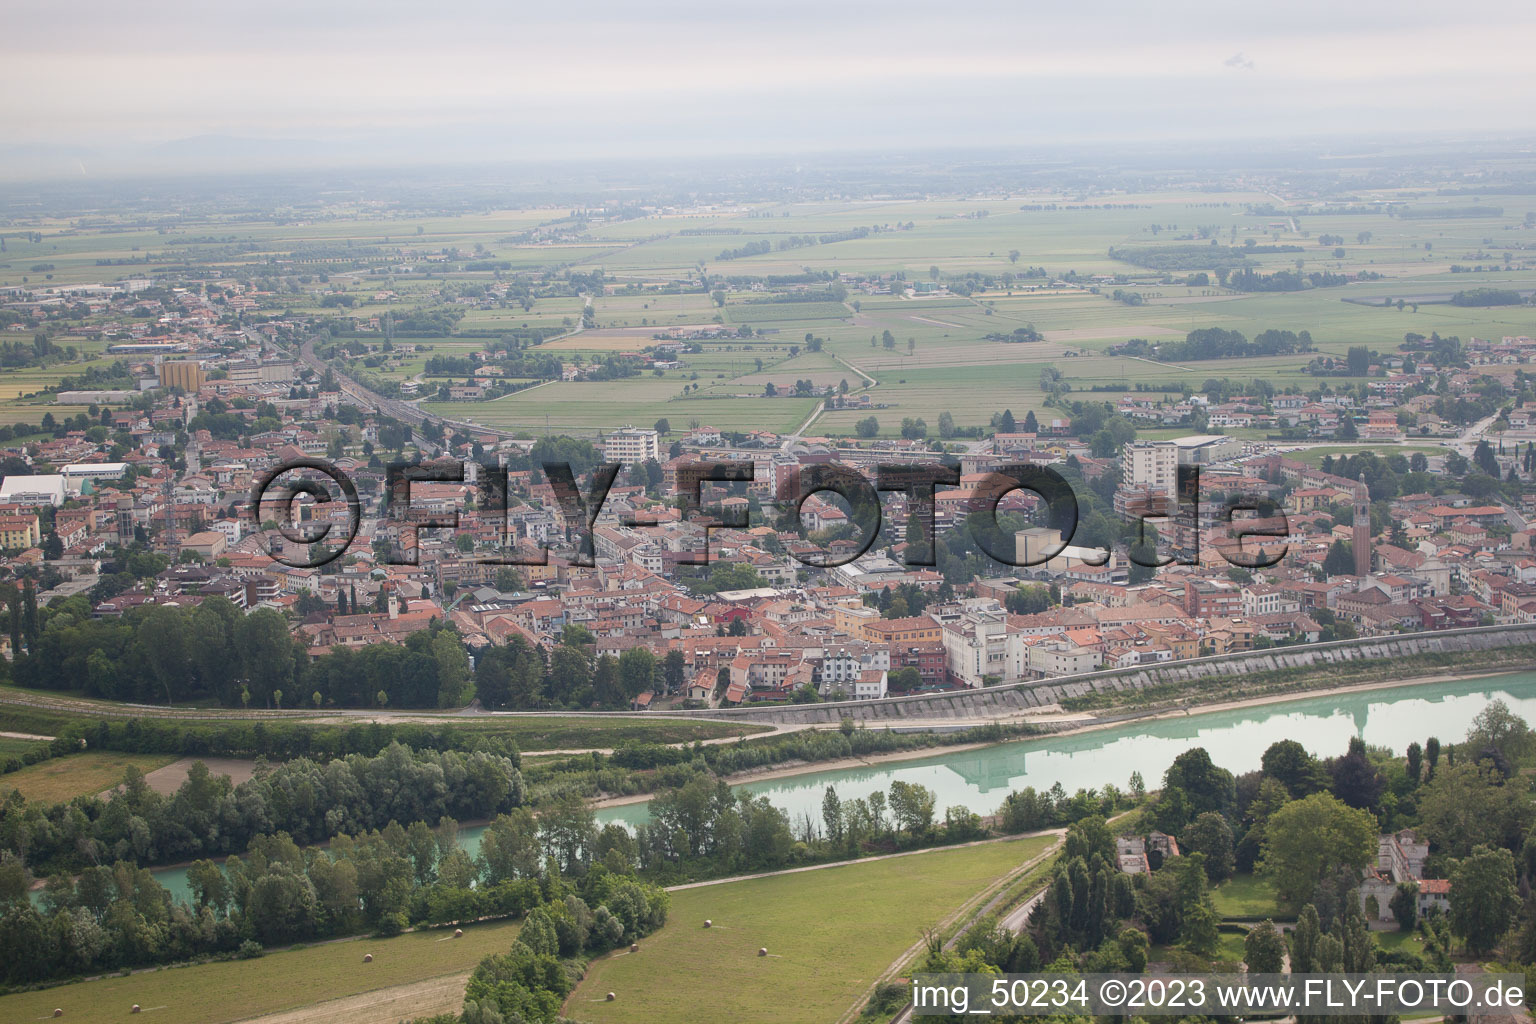 Aerial photograpy of Latisana in the state Friuli Venezia Giulia, Italy